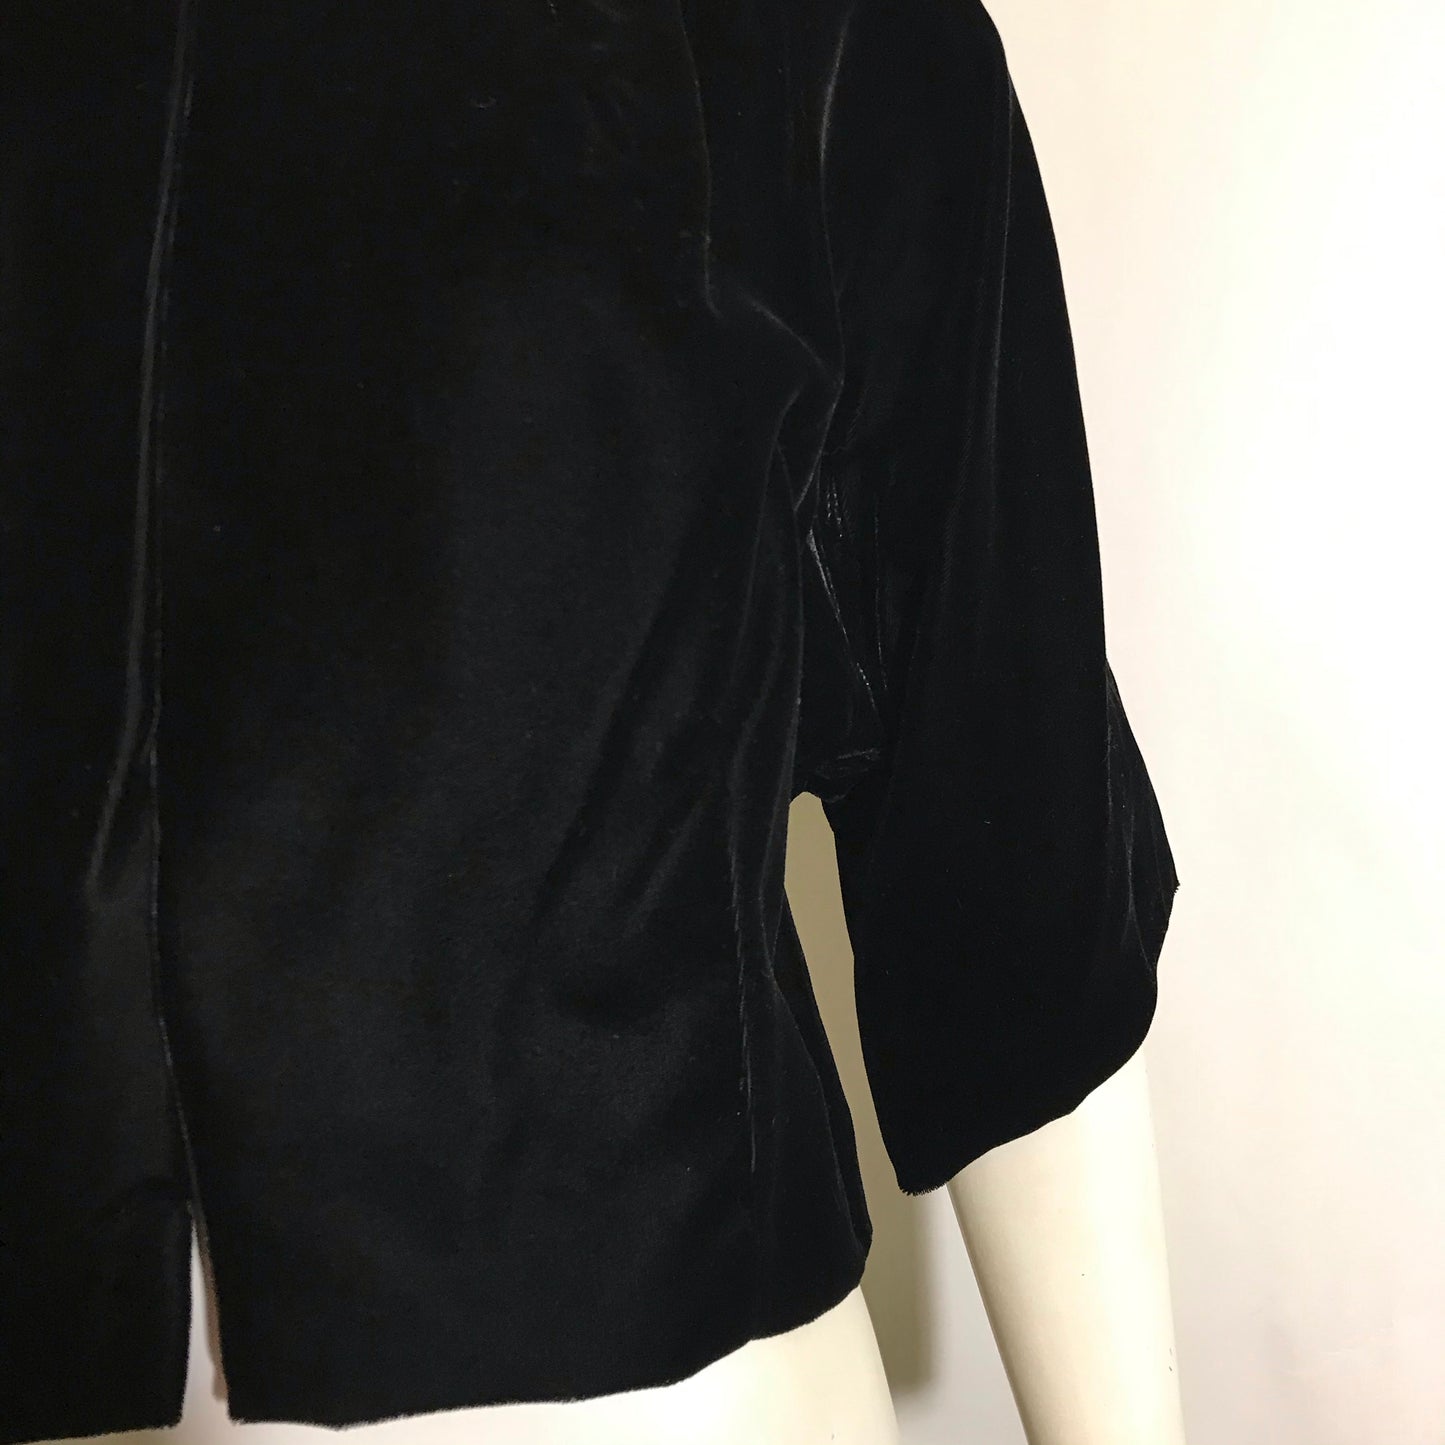 Black Velvet Cropped Jacket with Sequined Neckline circa 1960s ...